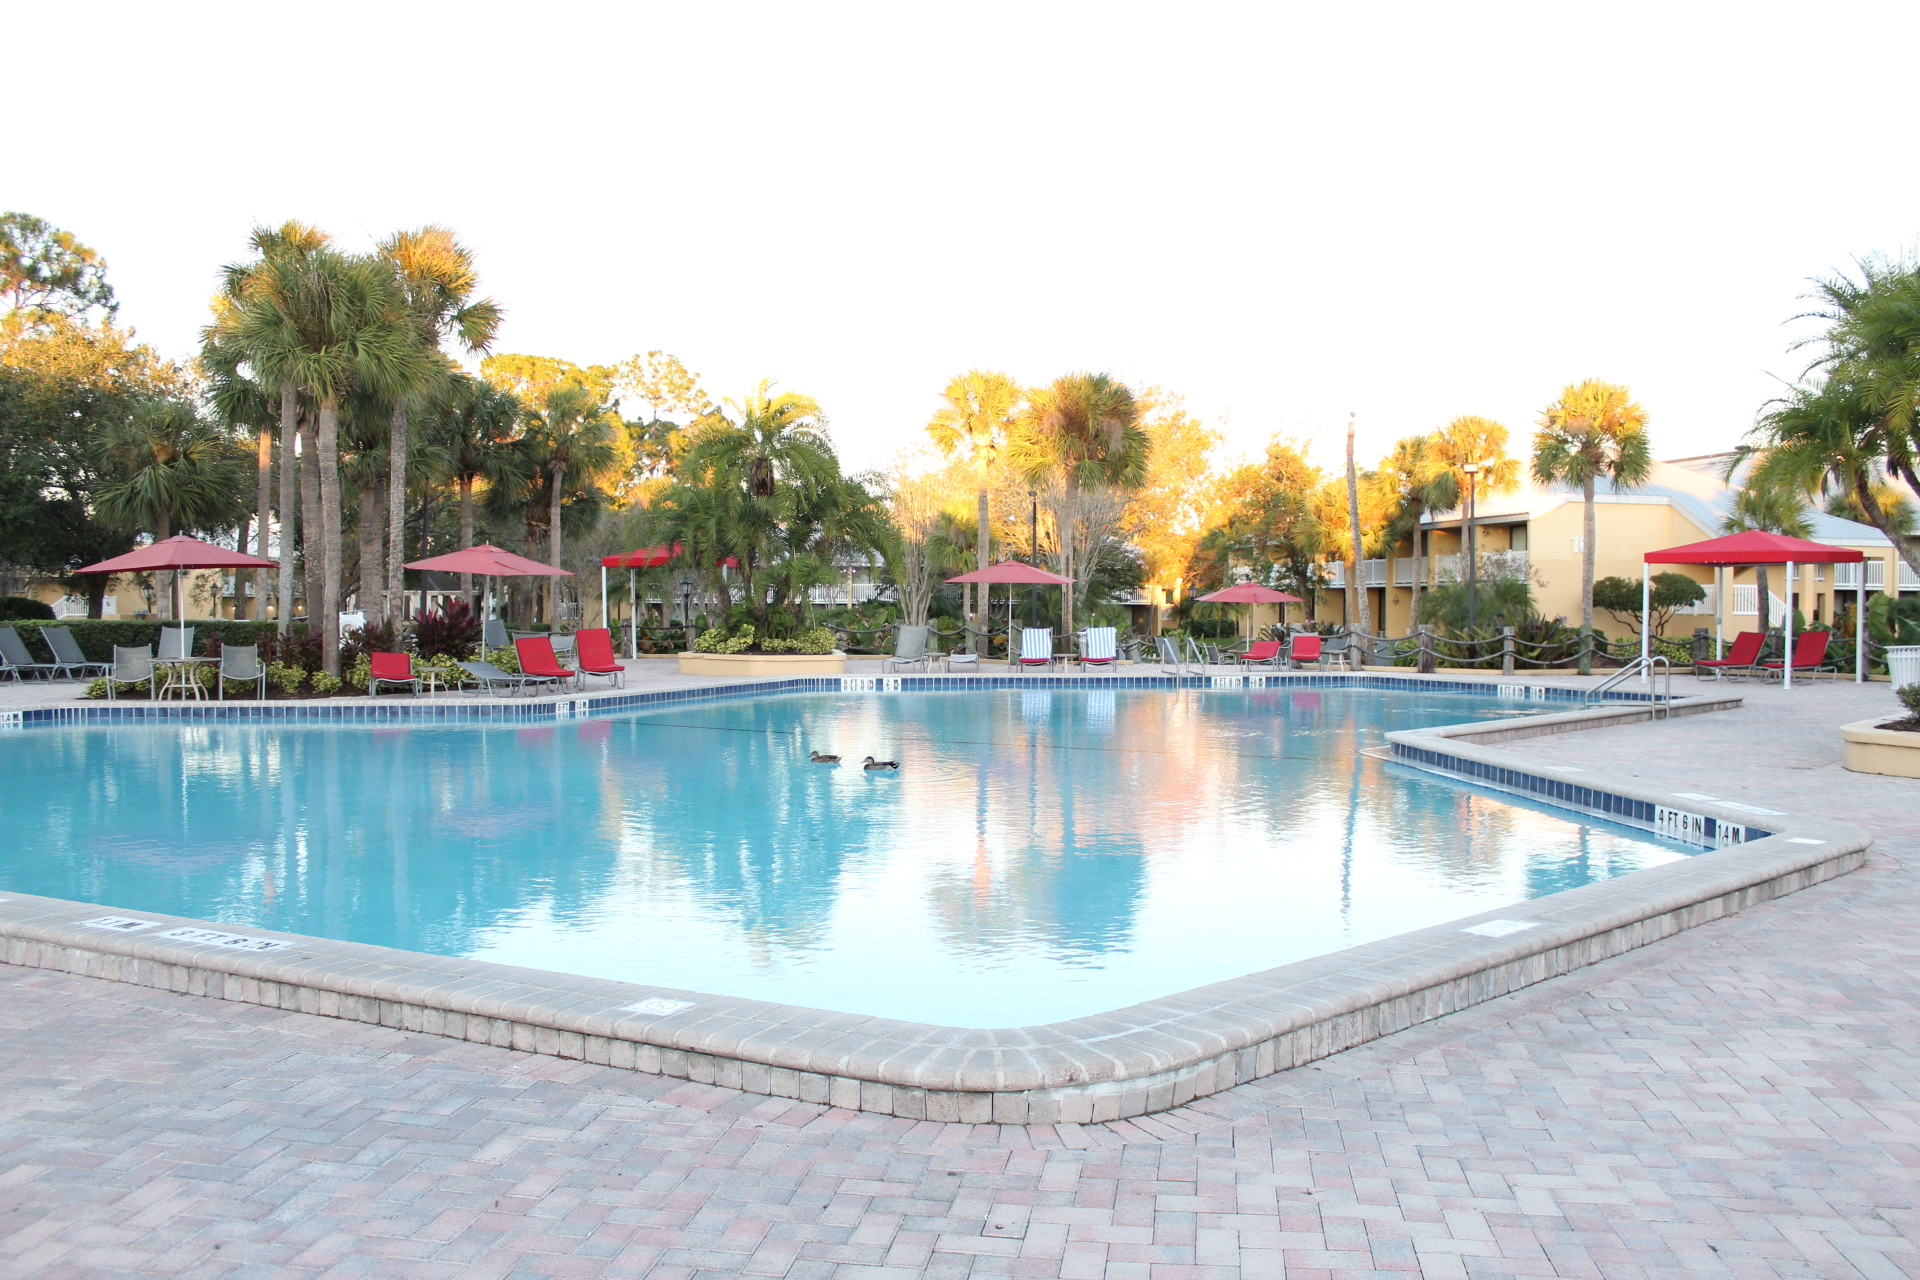 The pool at Wyndham Orlando Resort International Drive